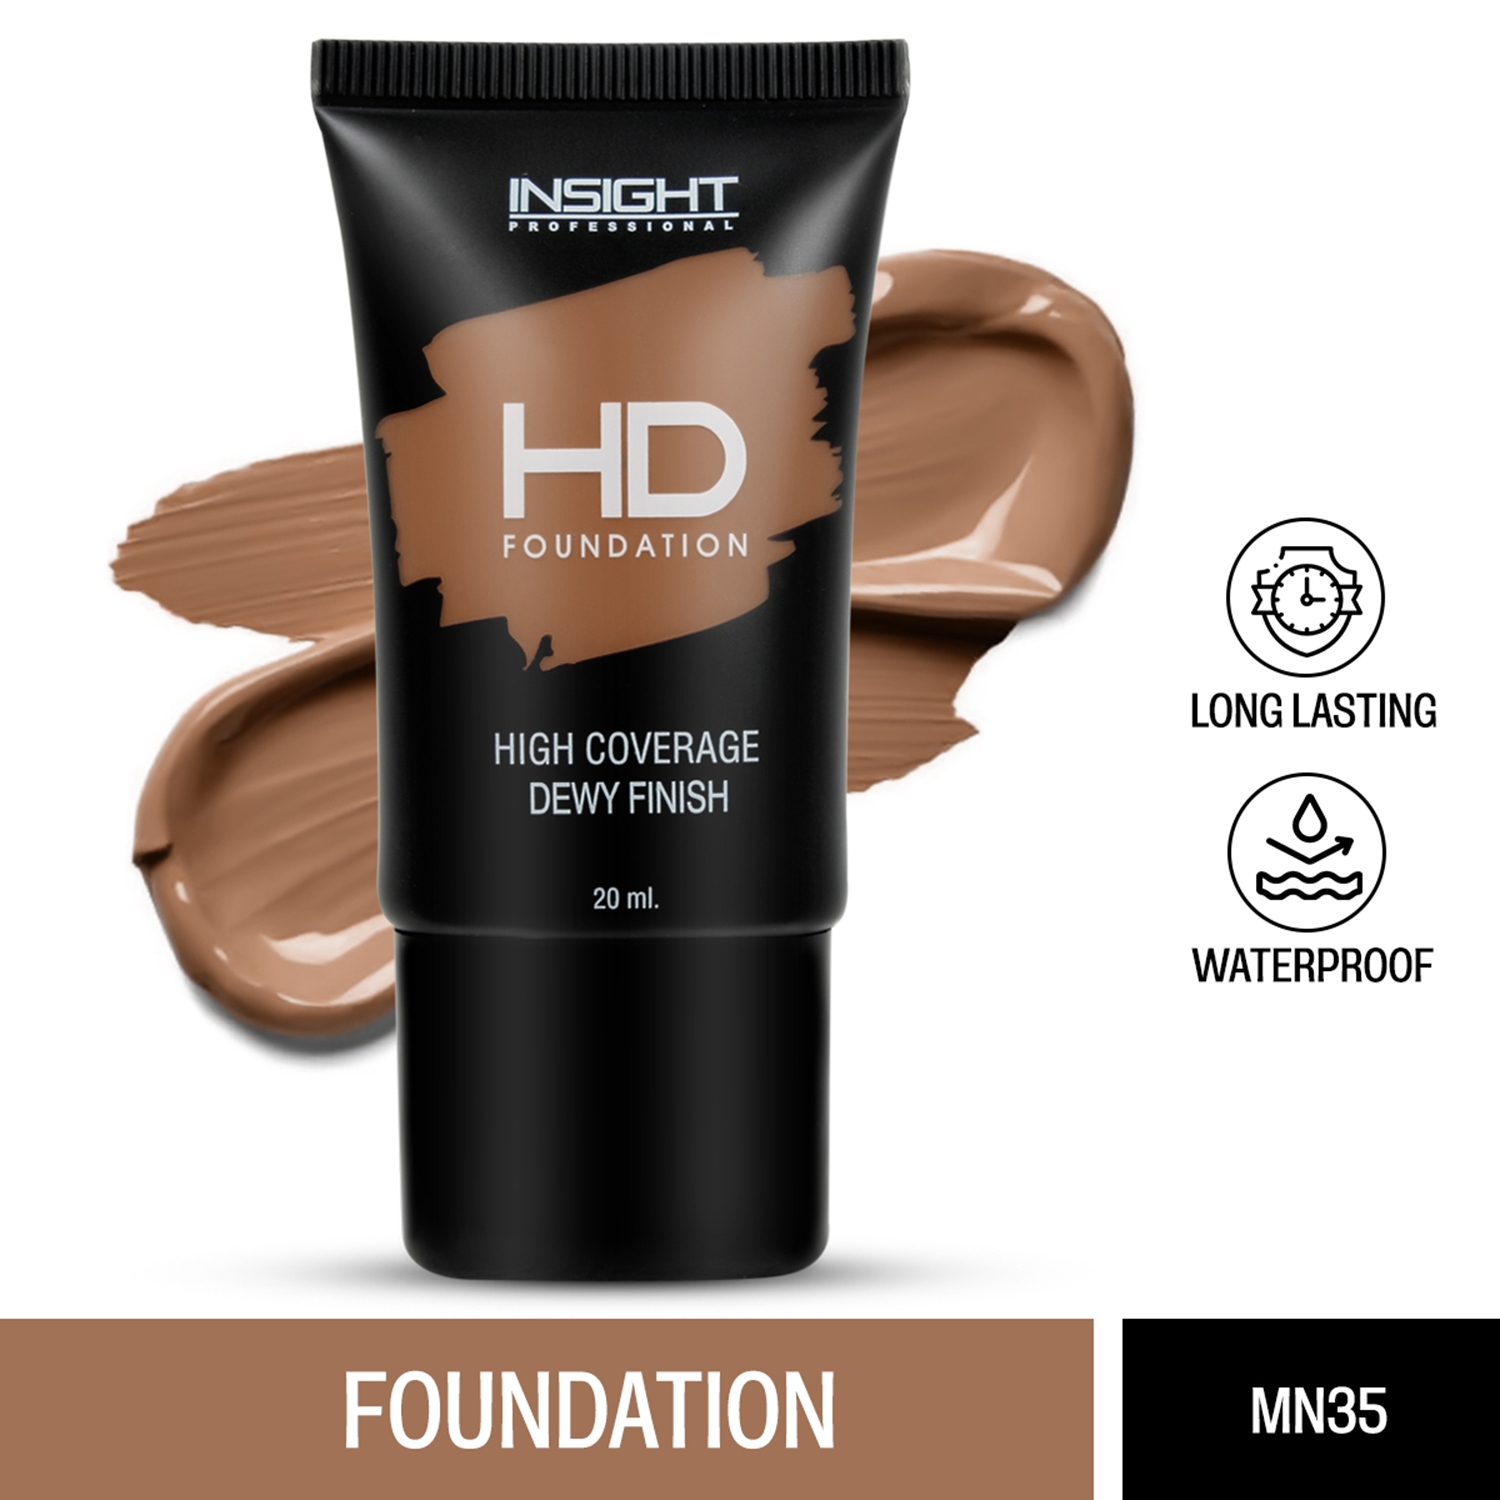 Insight Cosmetics | Insight Cosmetics Dewy Finish HD Foundation - MN 35 (20ml)